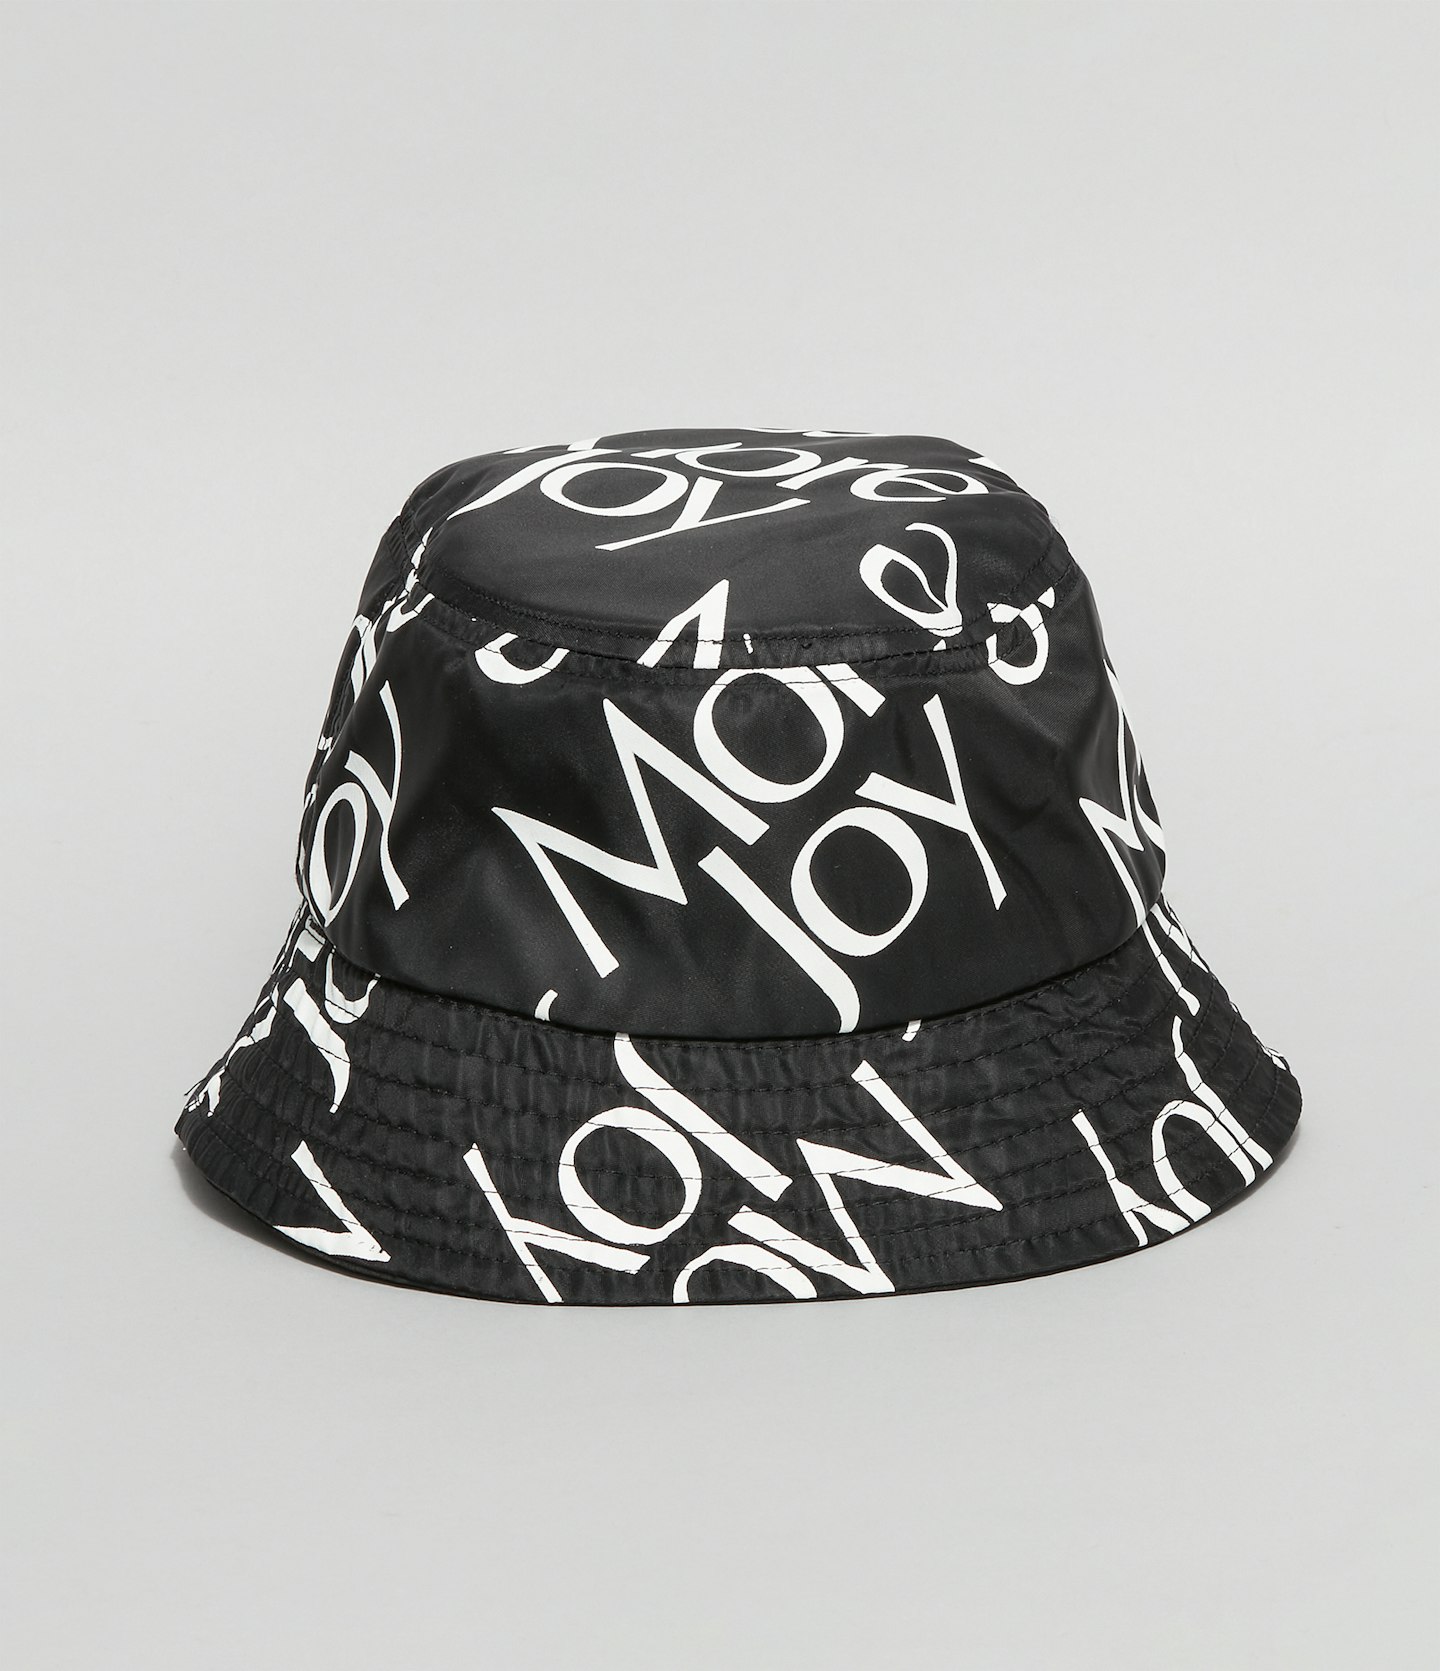 Christopher Kane, More Joy Bucket Hat, £80